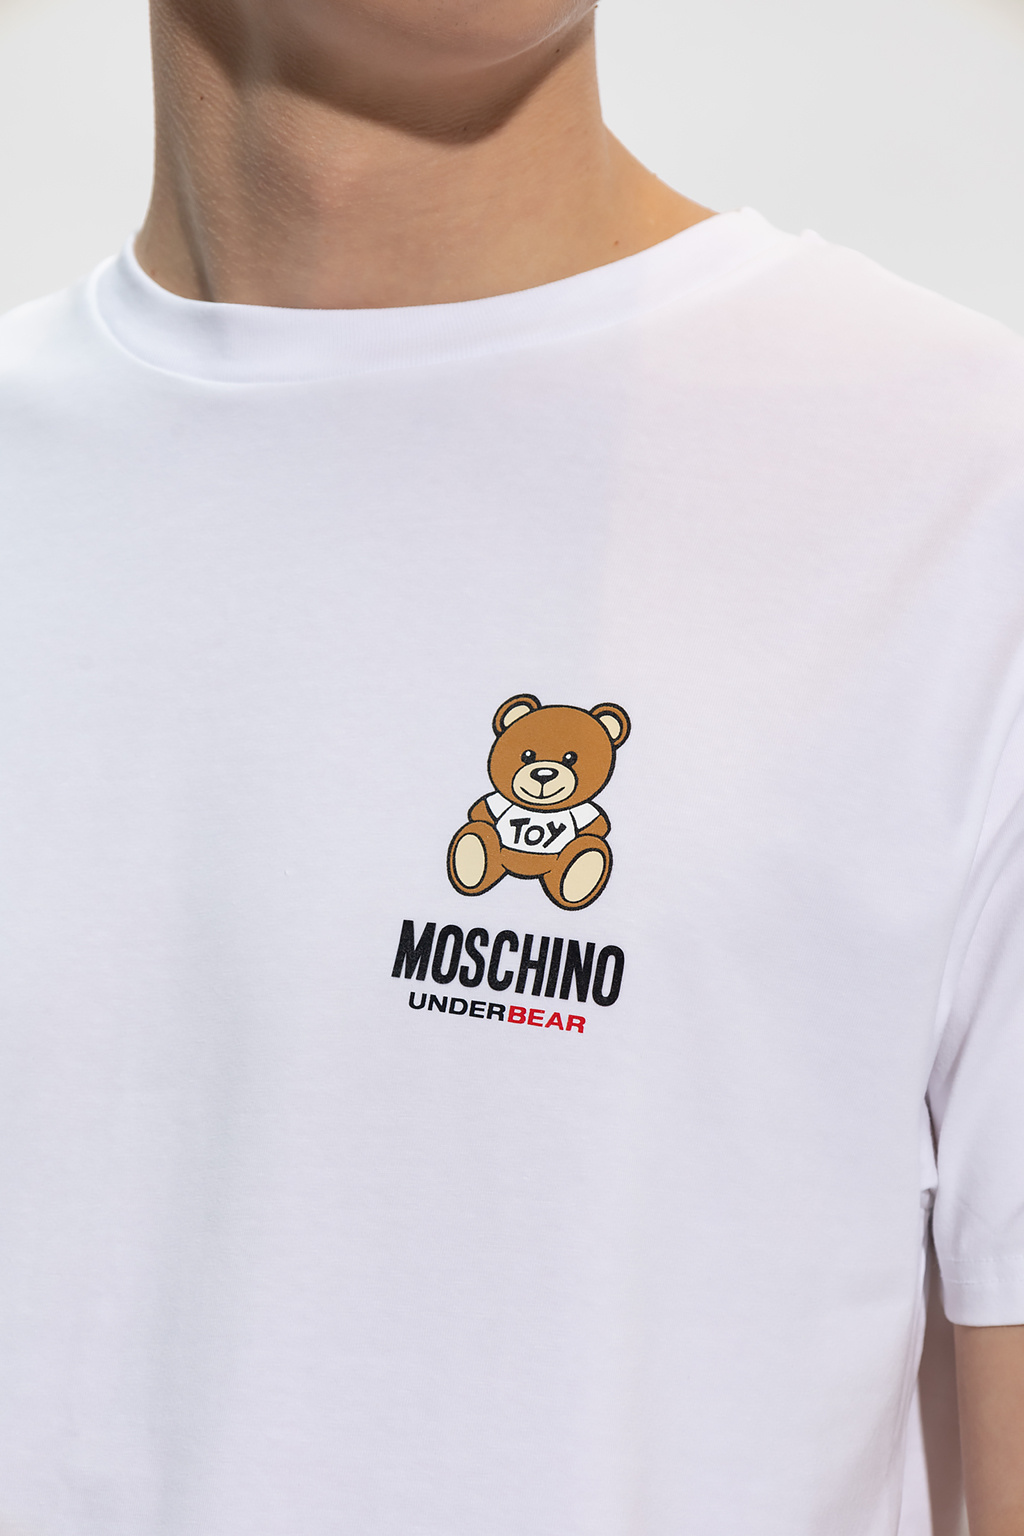 Moschino tee shirt zara